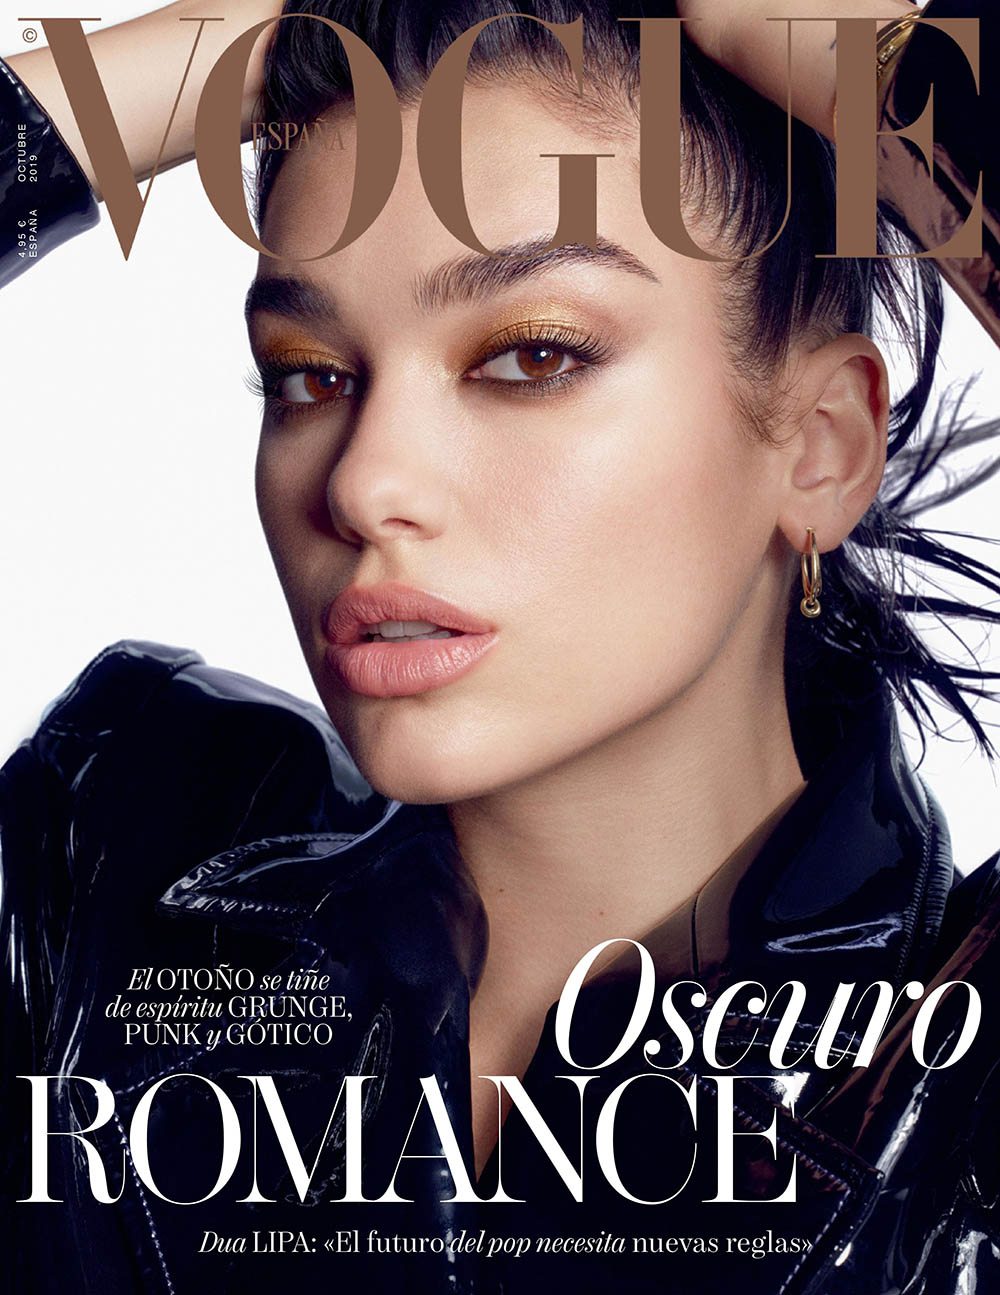 Dua Lipa covers Vogue Spain October 2019 by Luigi & Iango